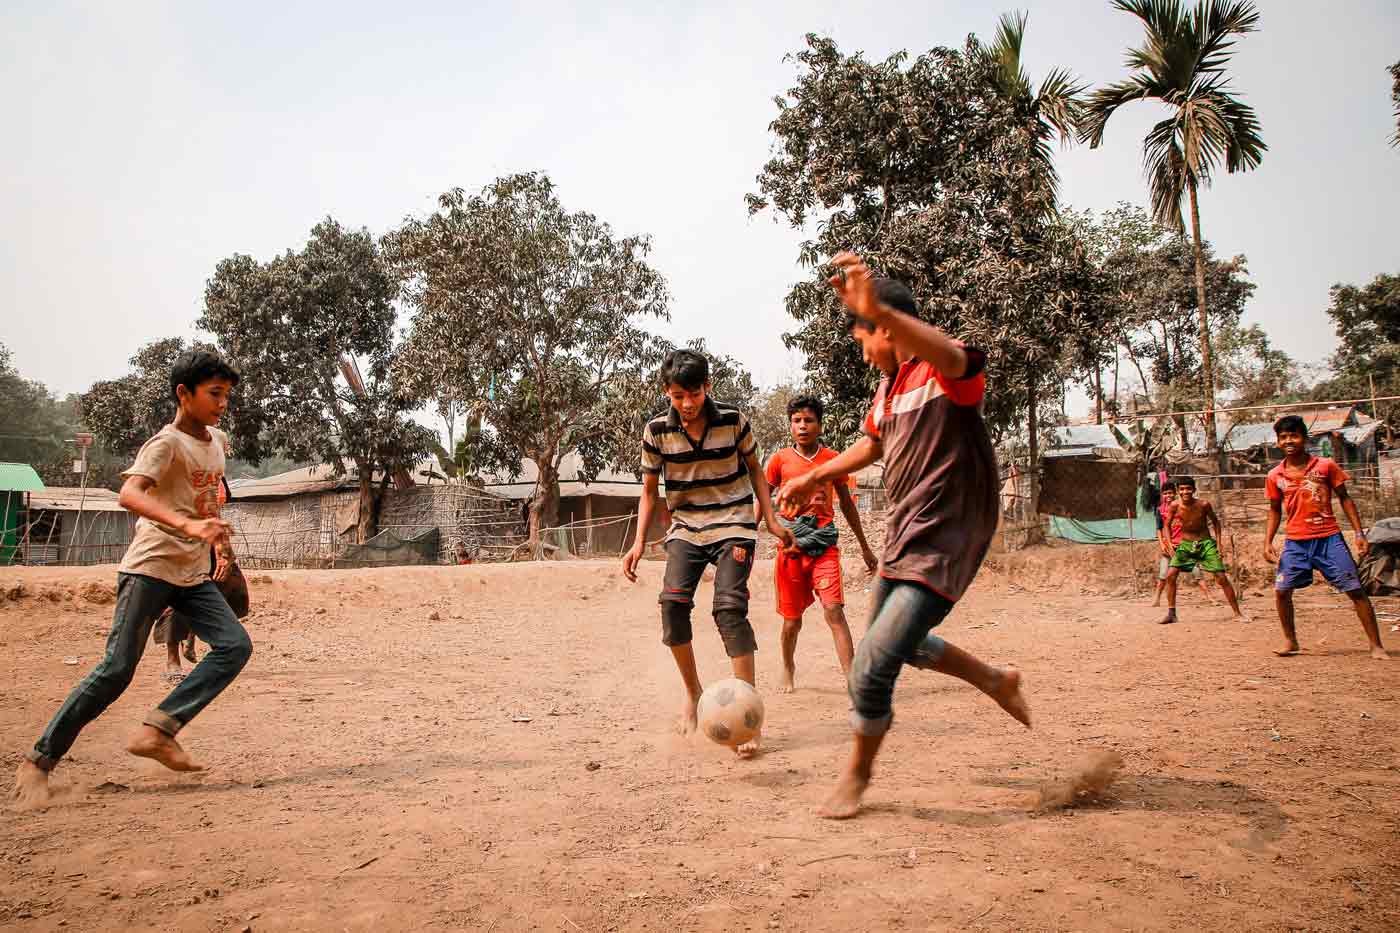 boys playing soccer